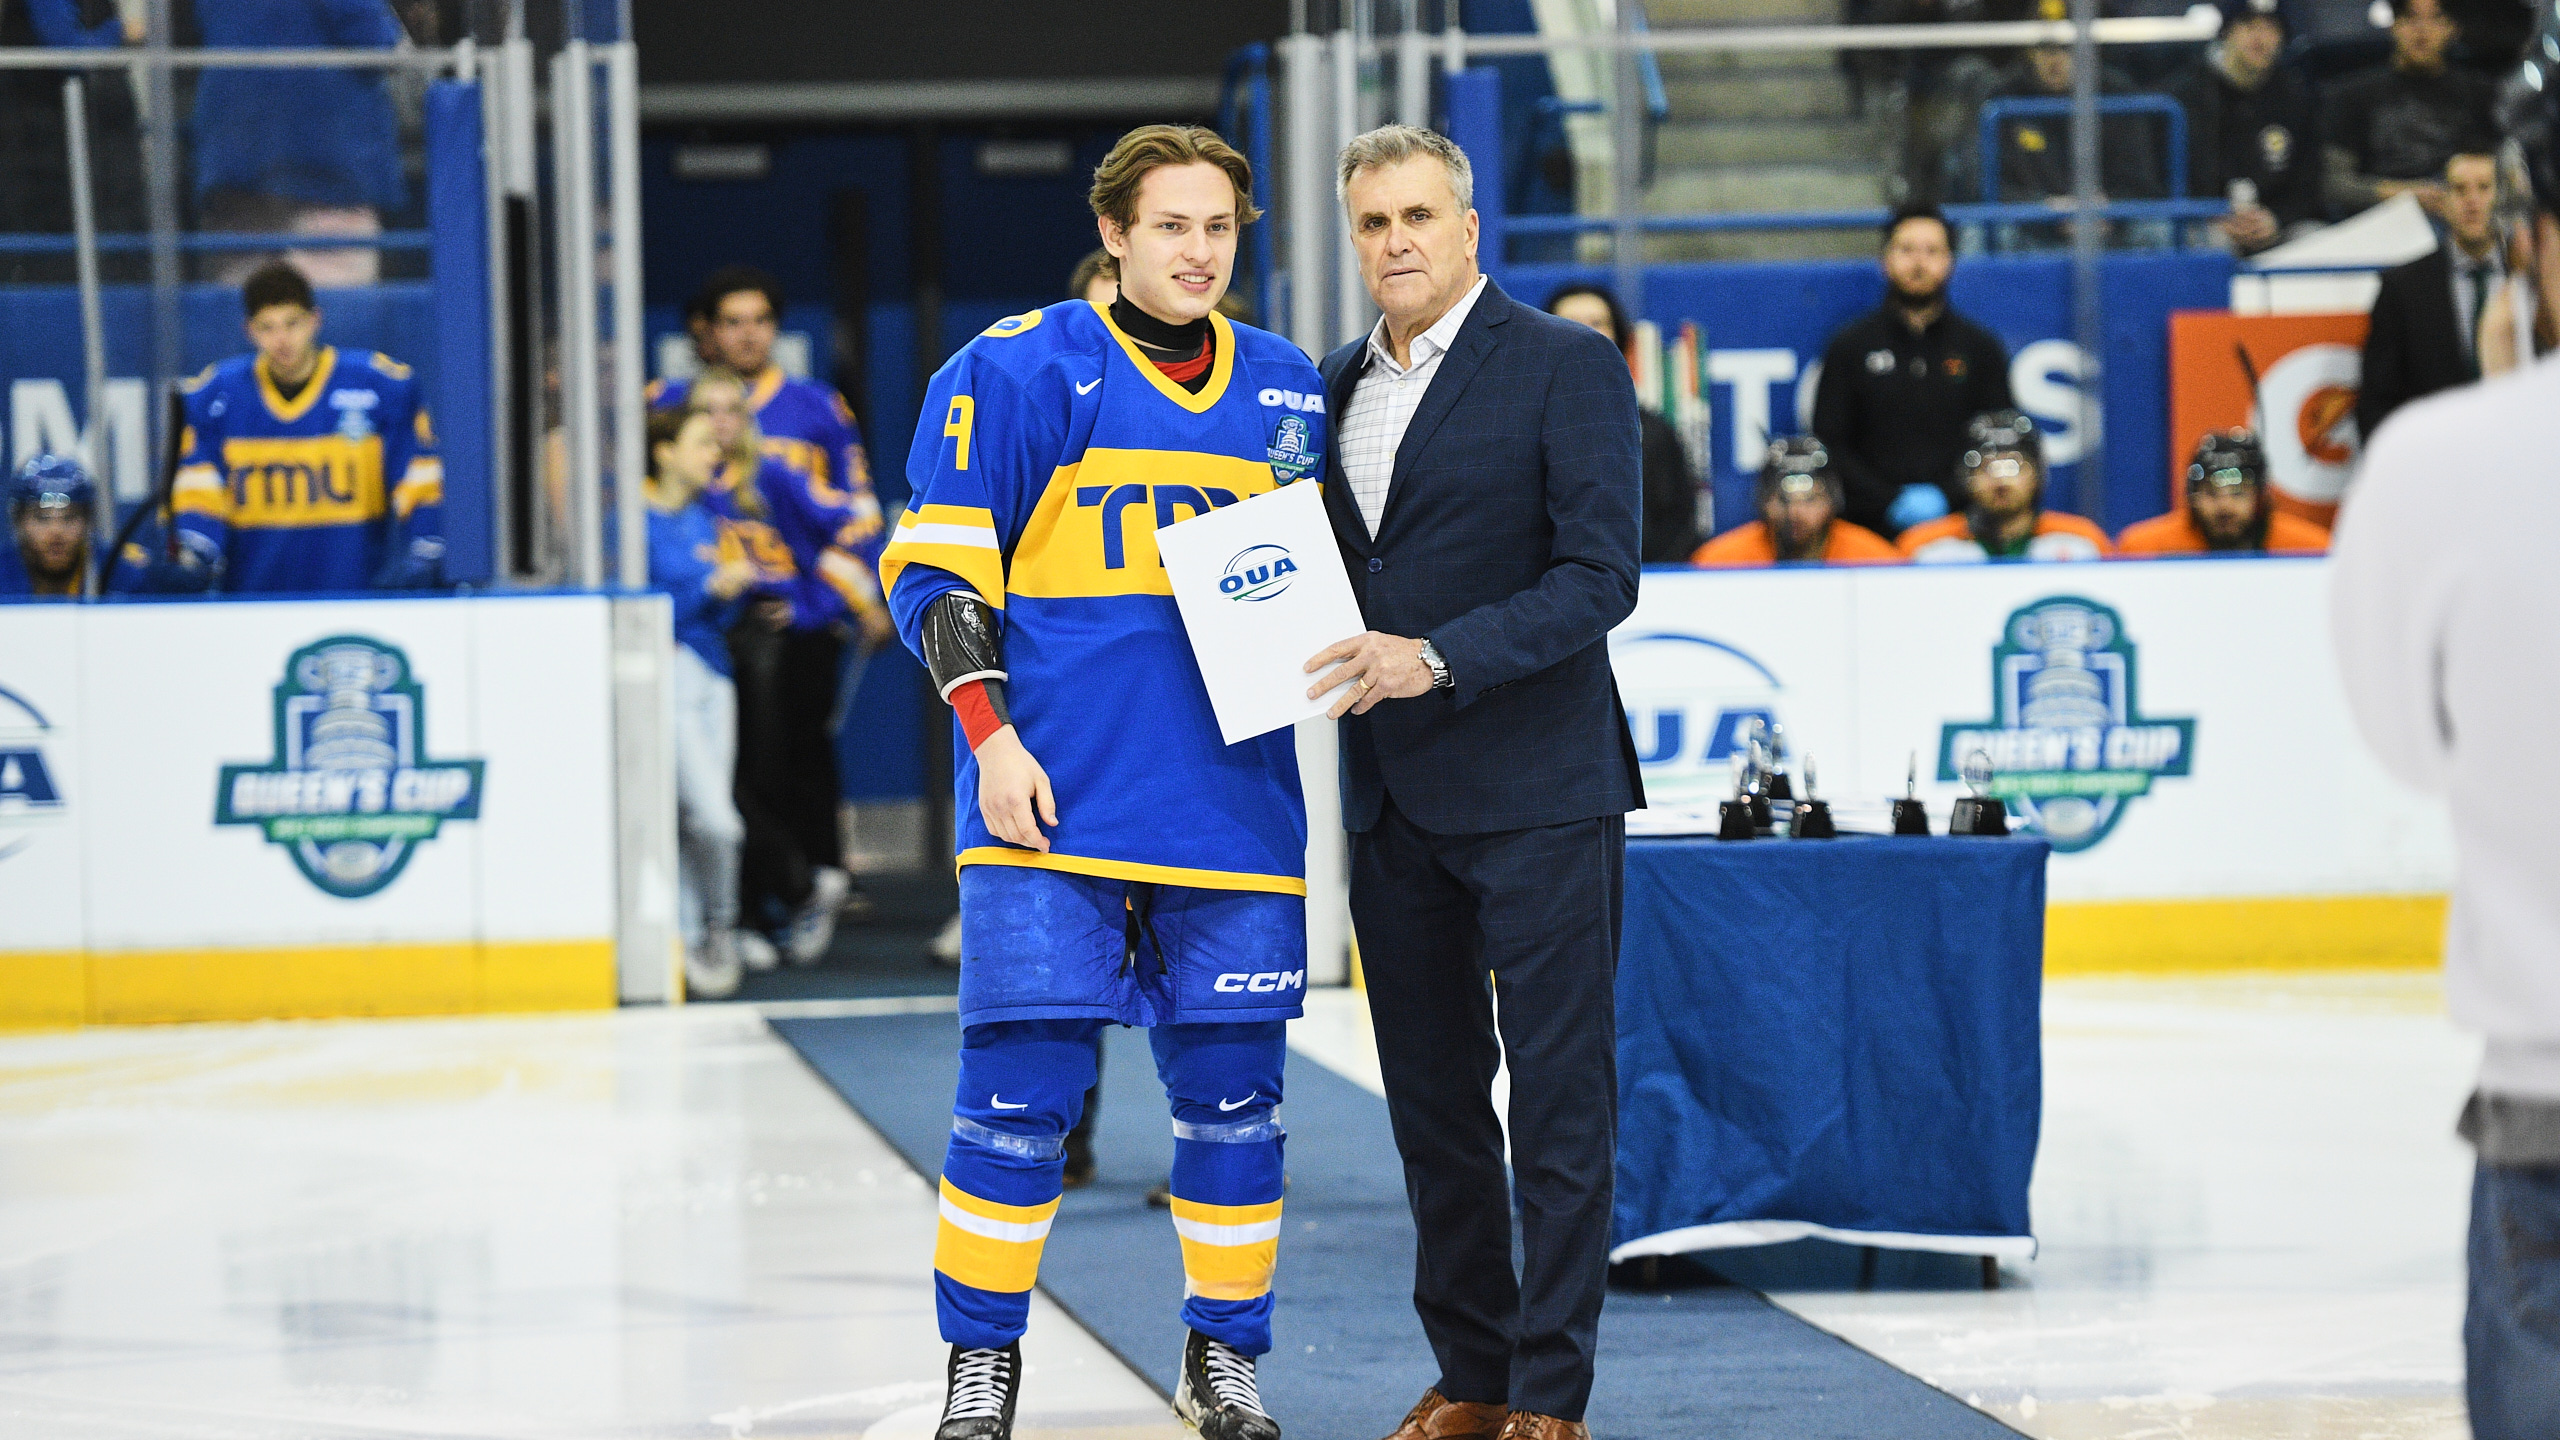 TMU men's hockey player Daniil Grigorev accepts an award